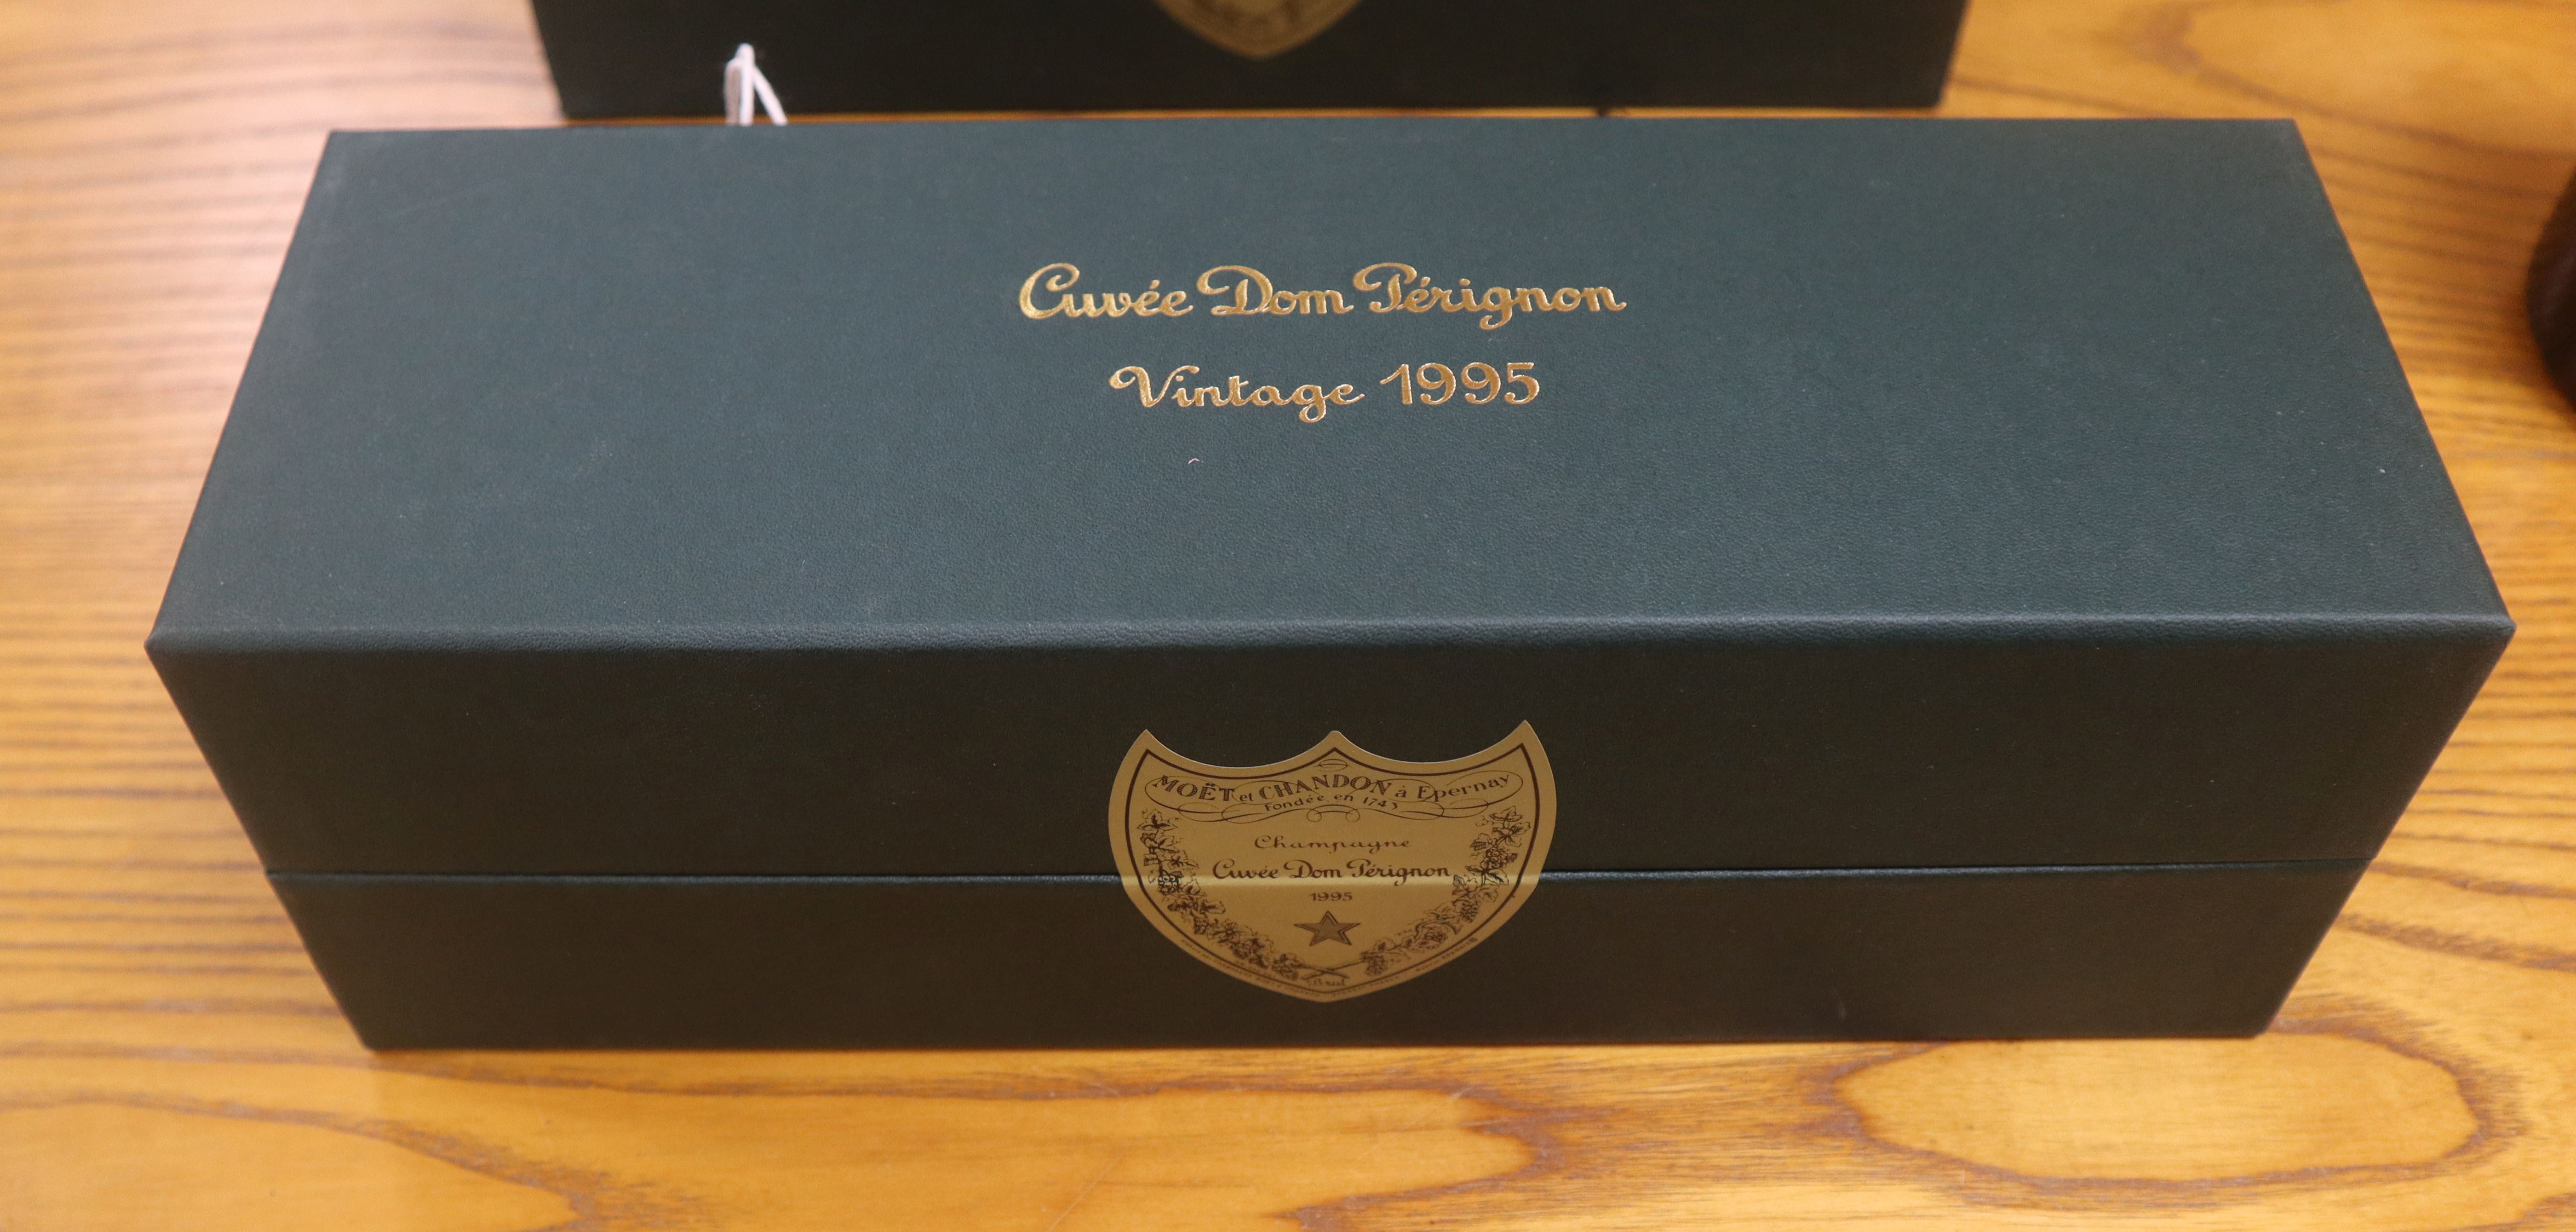 A bottle of Cuvee Dom Perignon, 1995, boxed